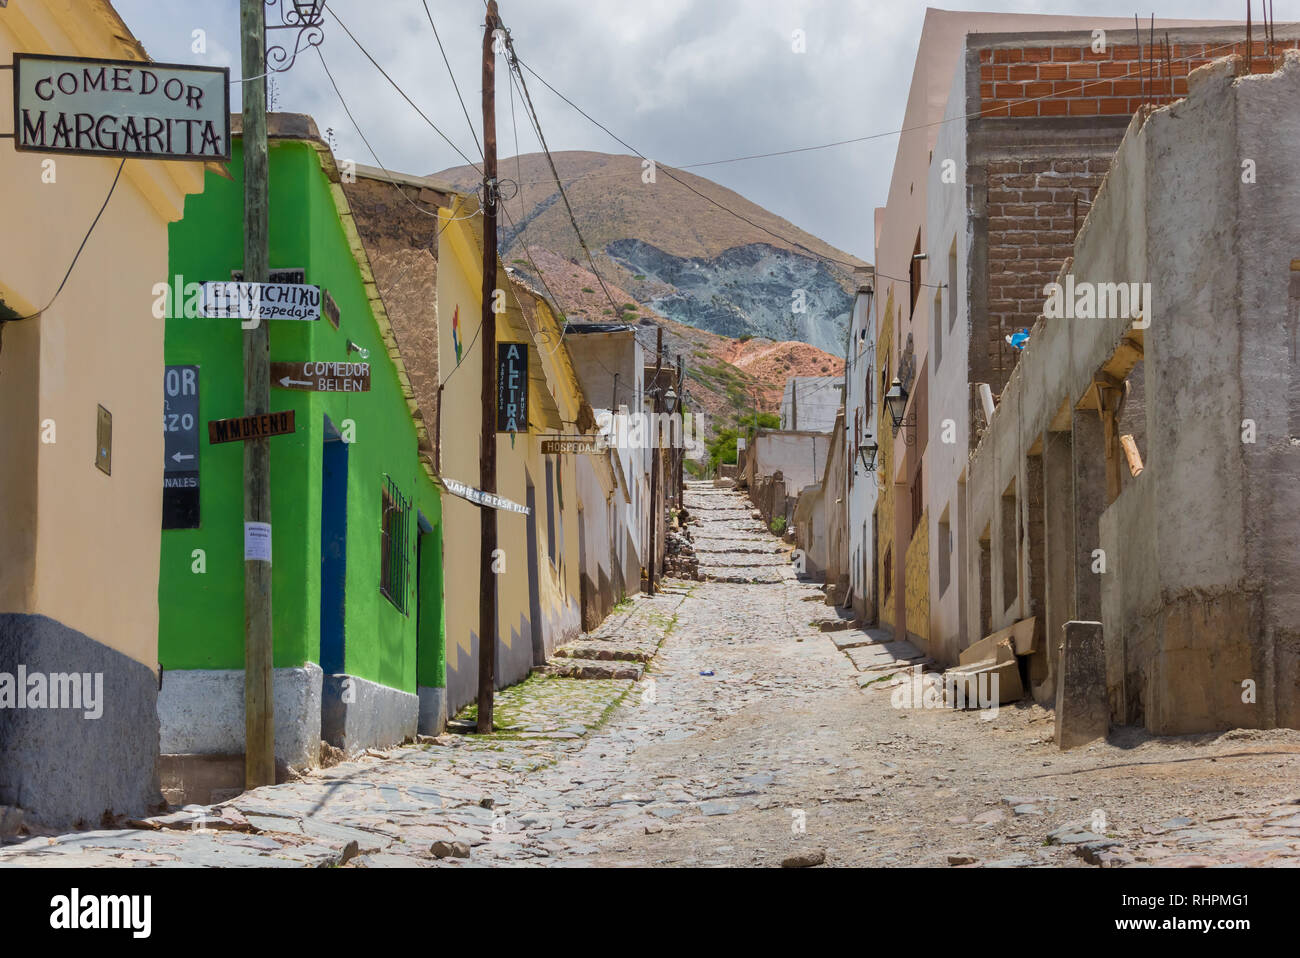 Cobblestoned street in the center of indigenous village Iruya, Argentina Stock Photo